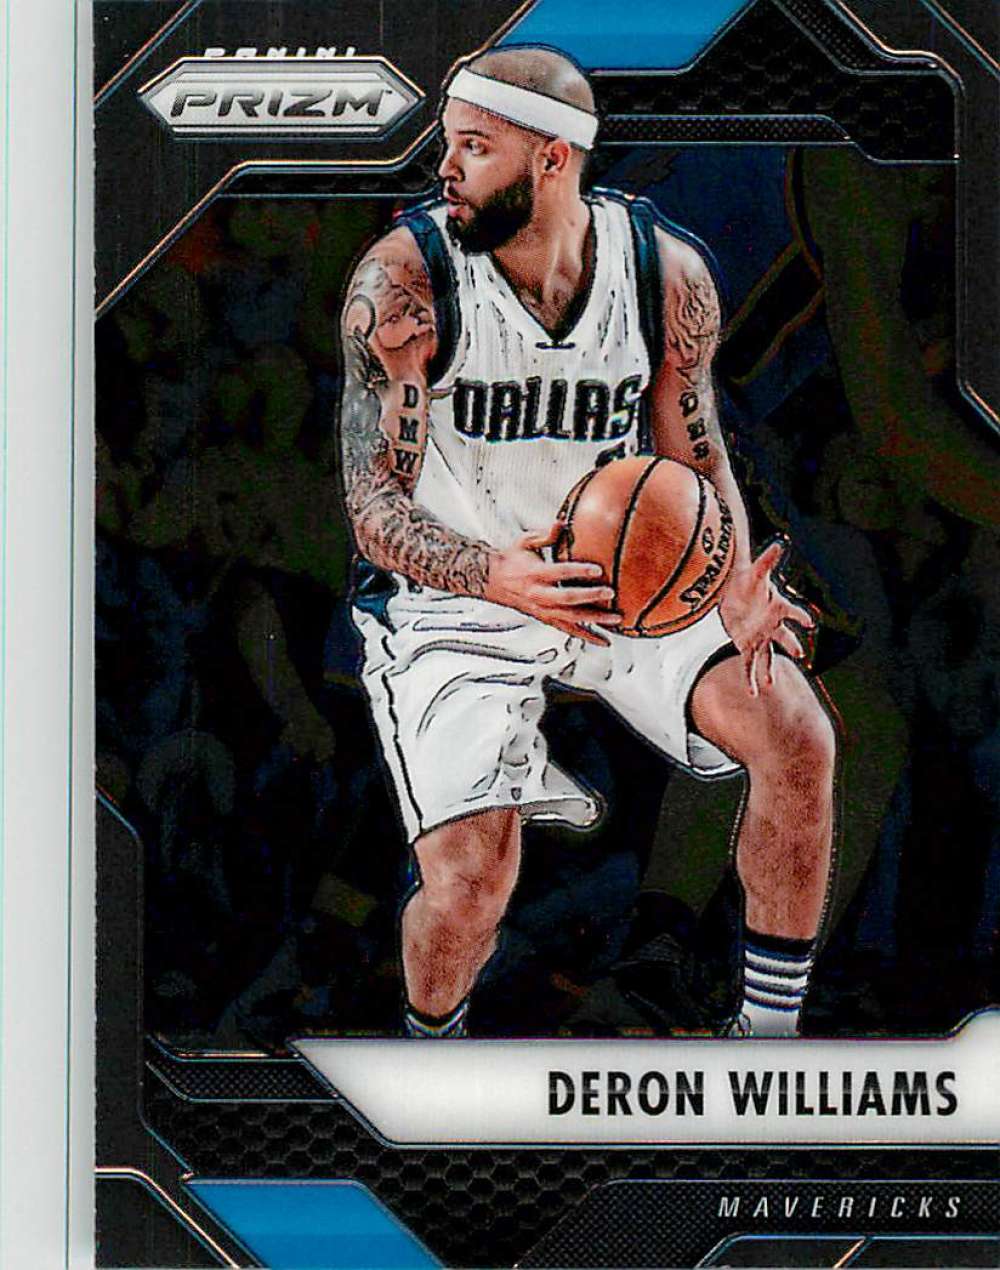 2016-17 Panini Prizm Basketball #154 Deron Williams Dallas Mavericks Official NBA Trading Card